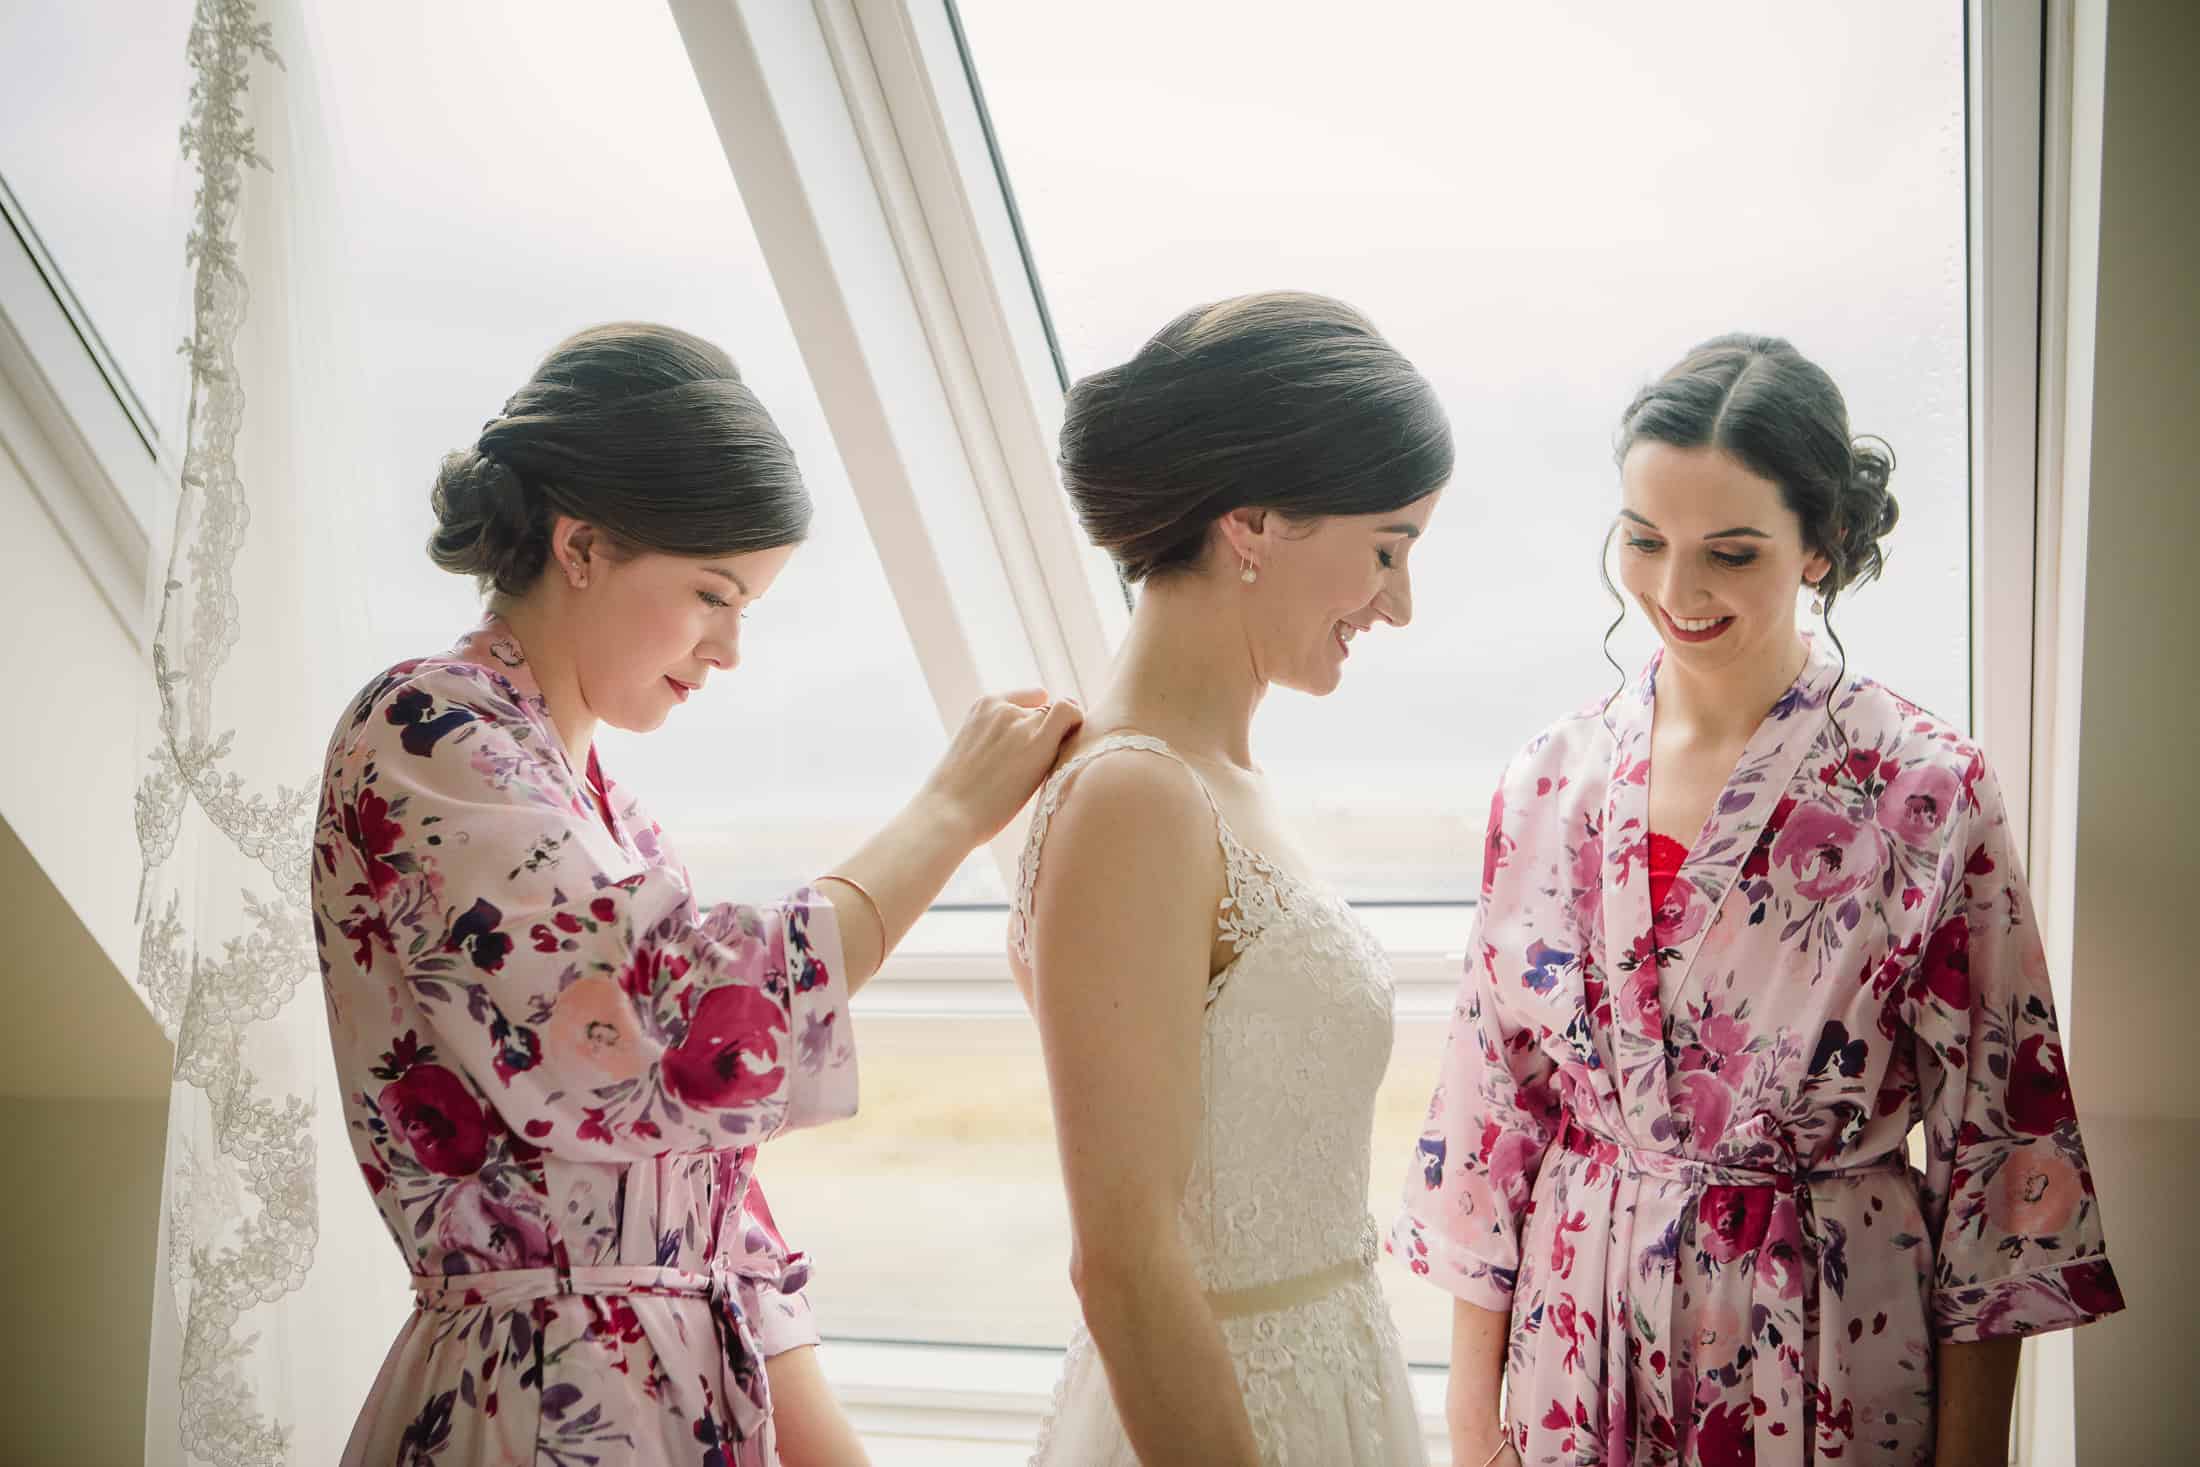 Bridesmaids helping bride with wedding dress Isle of Skye